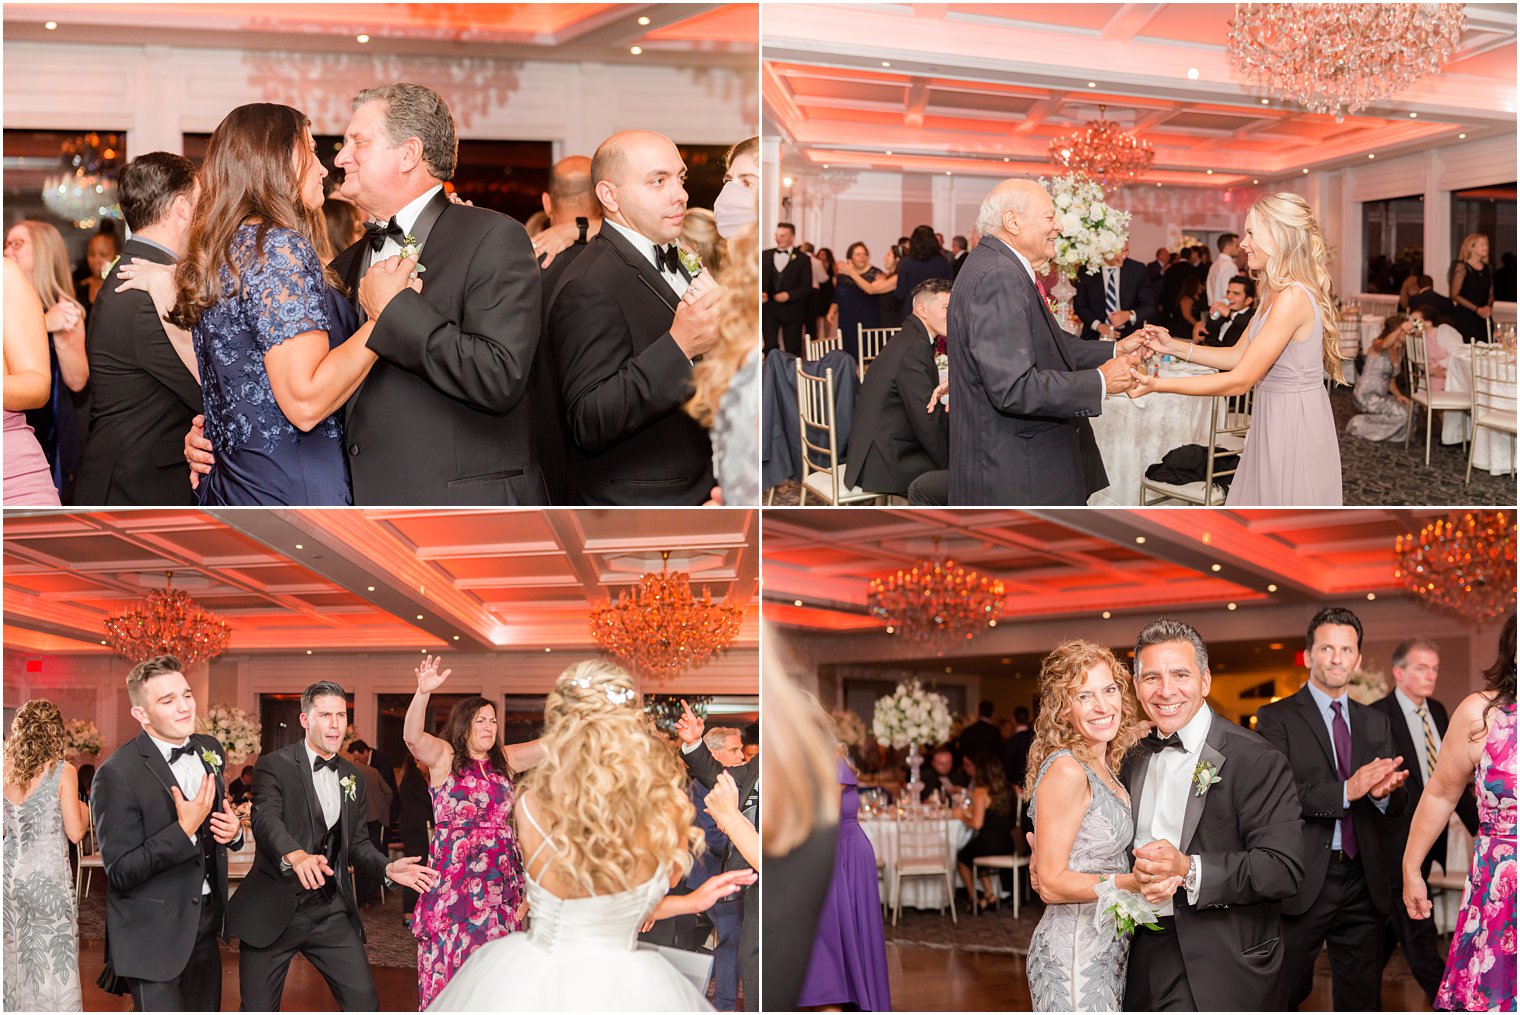 Spring Lake NJ wedding reception dancing